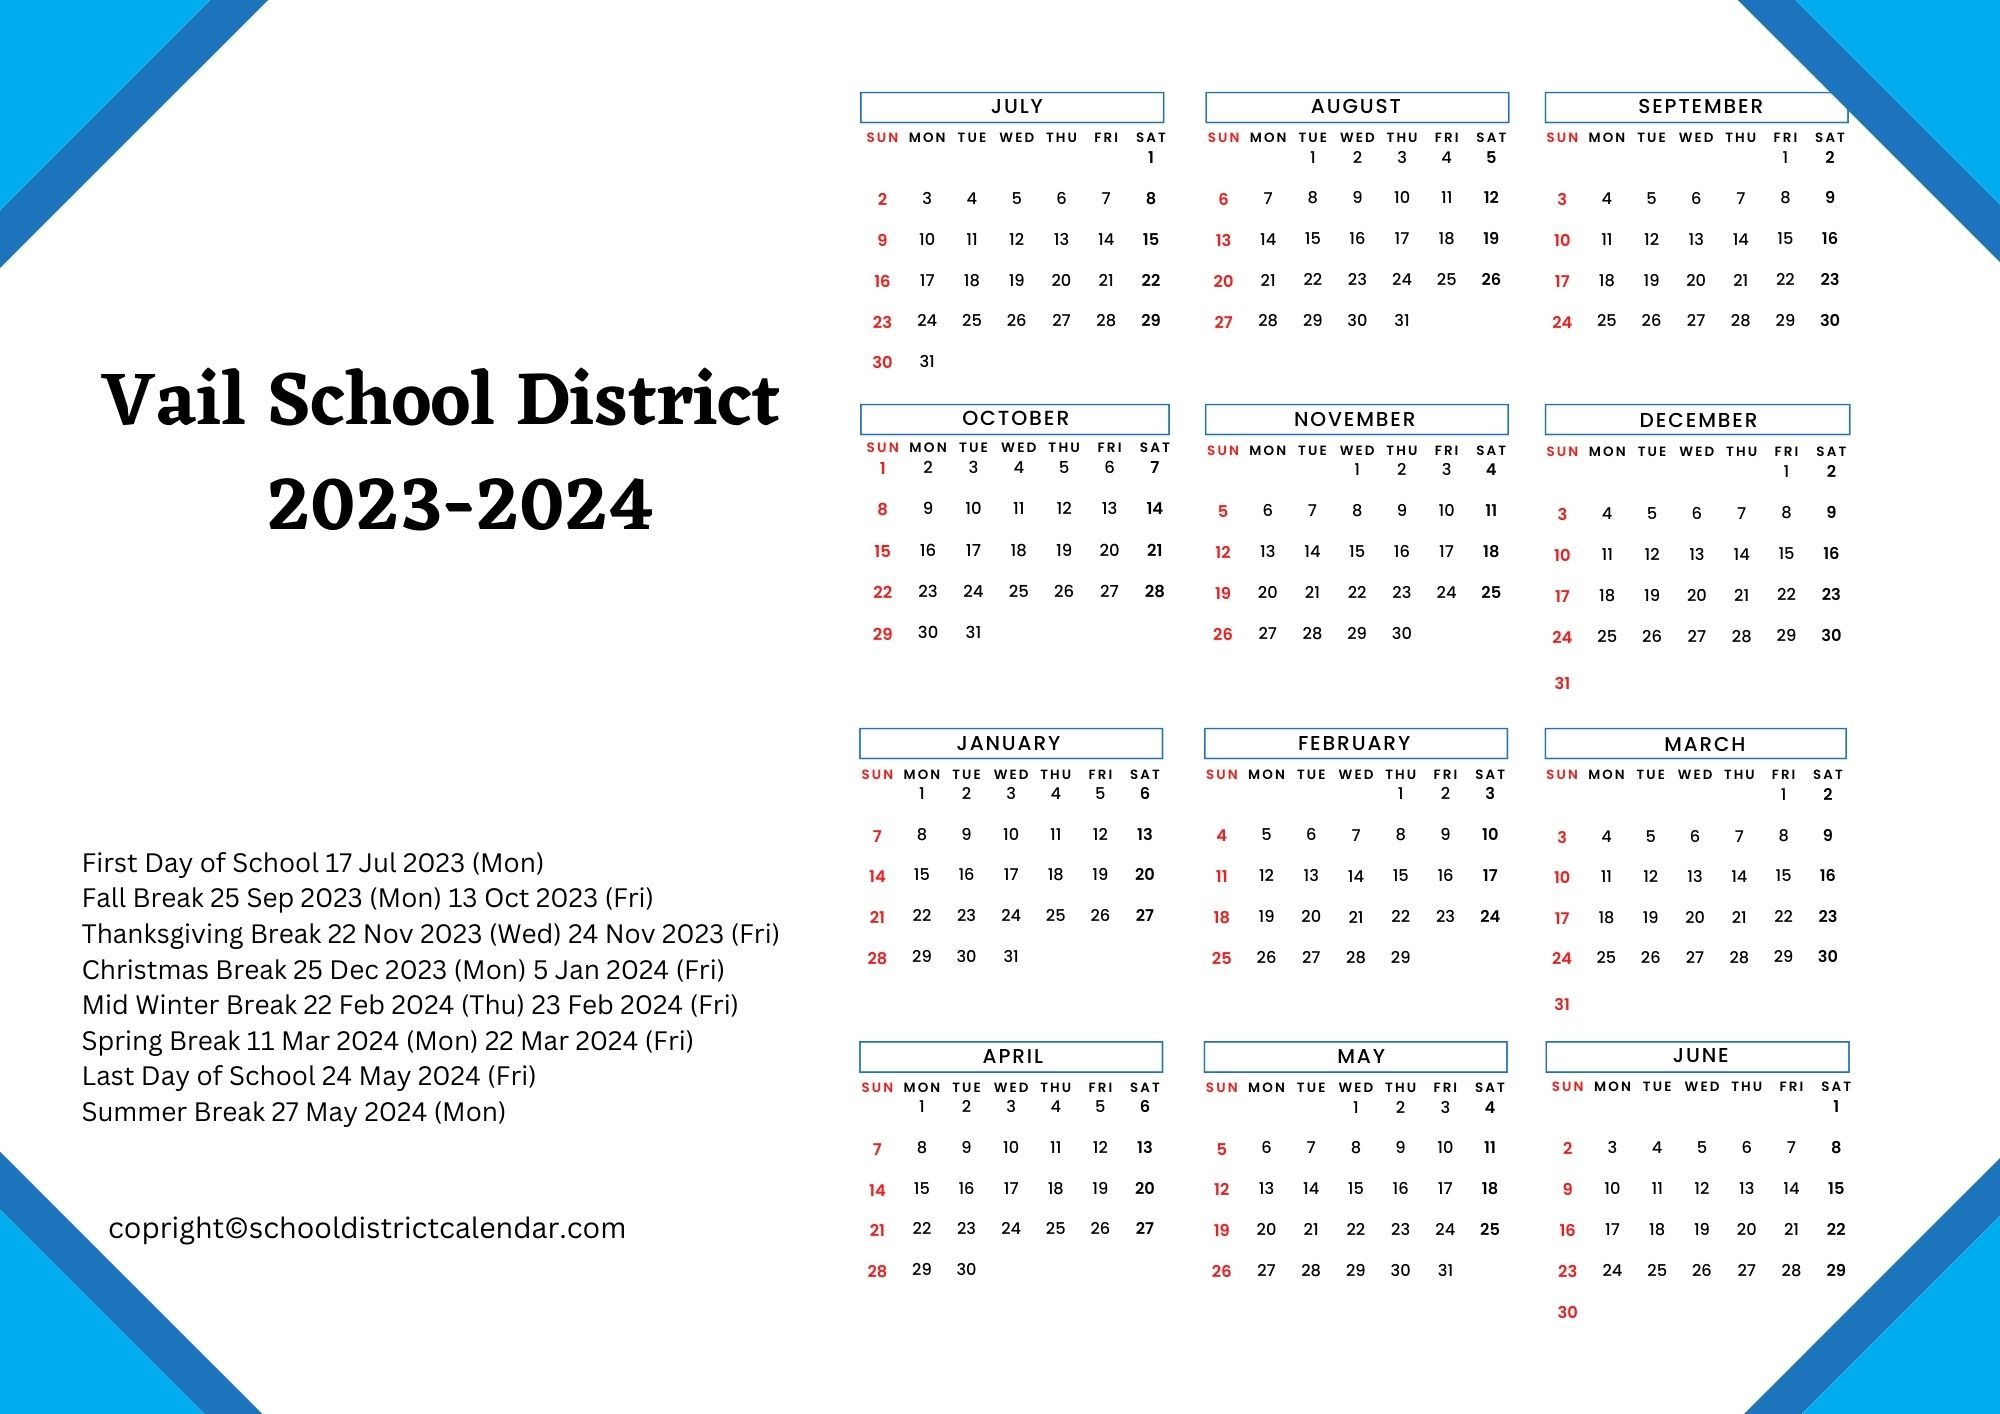 vail-school-district-calendar-holidays-2023-2024